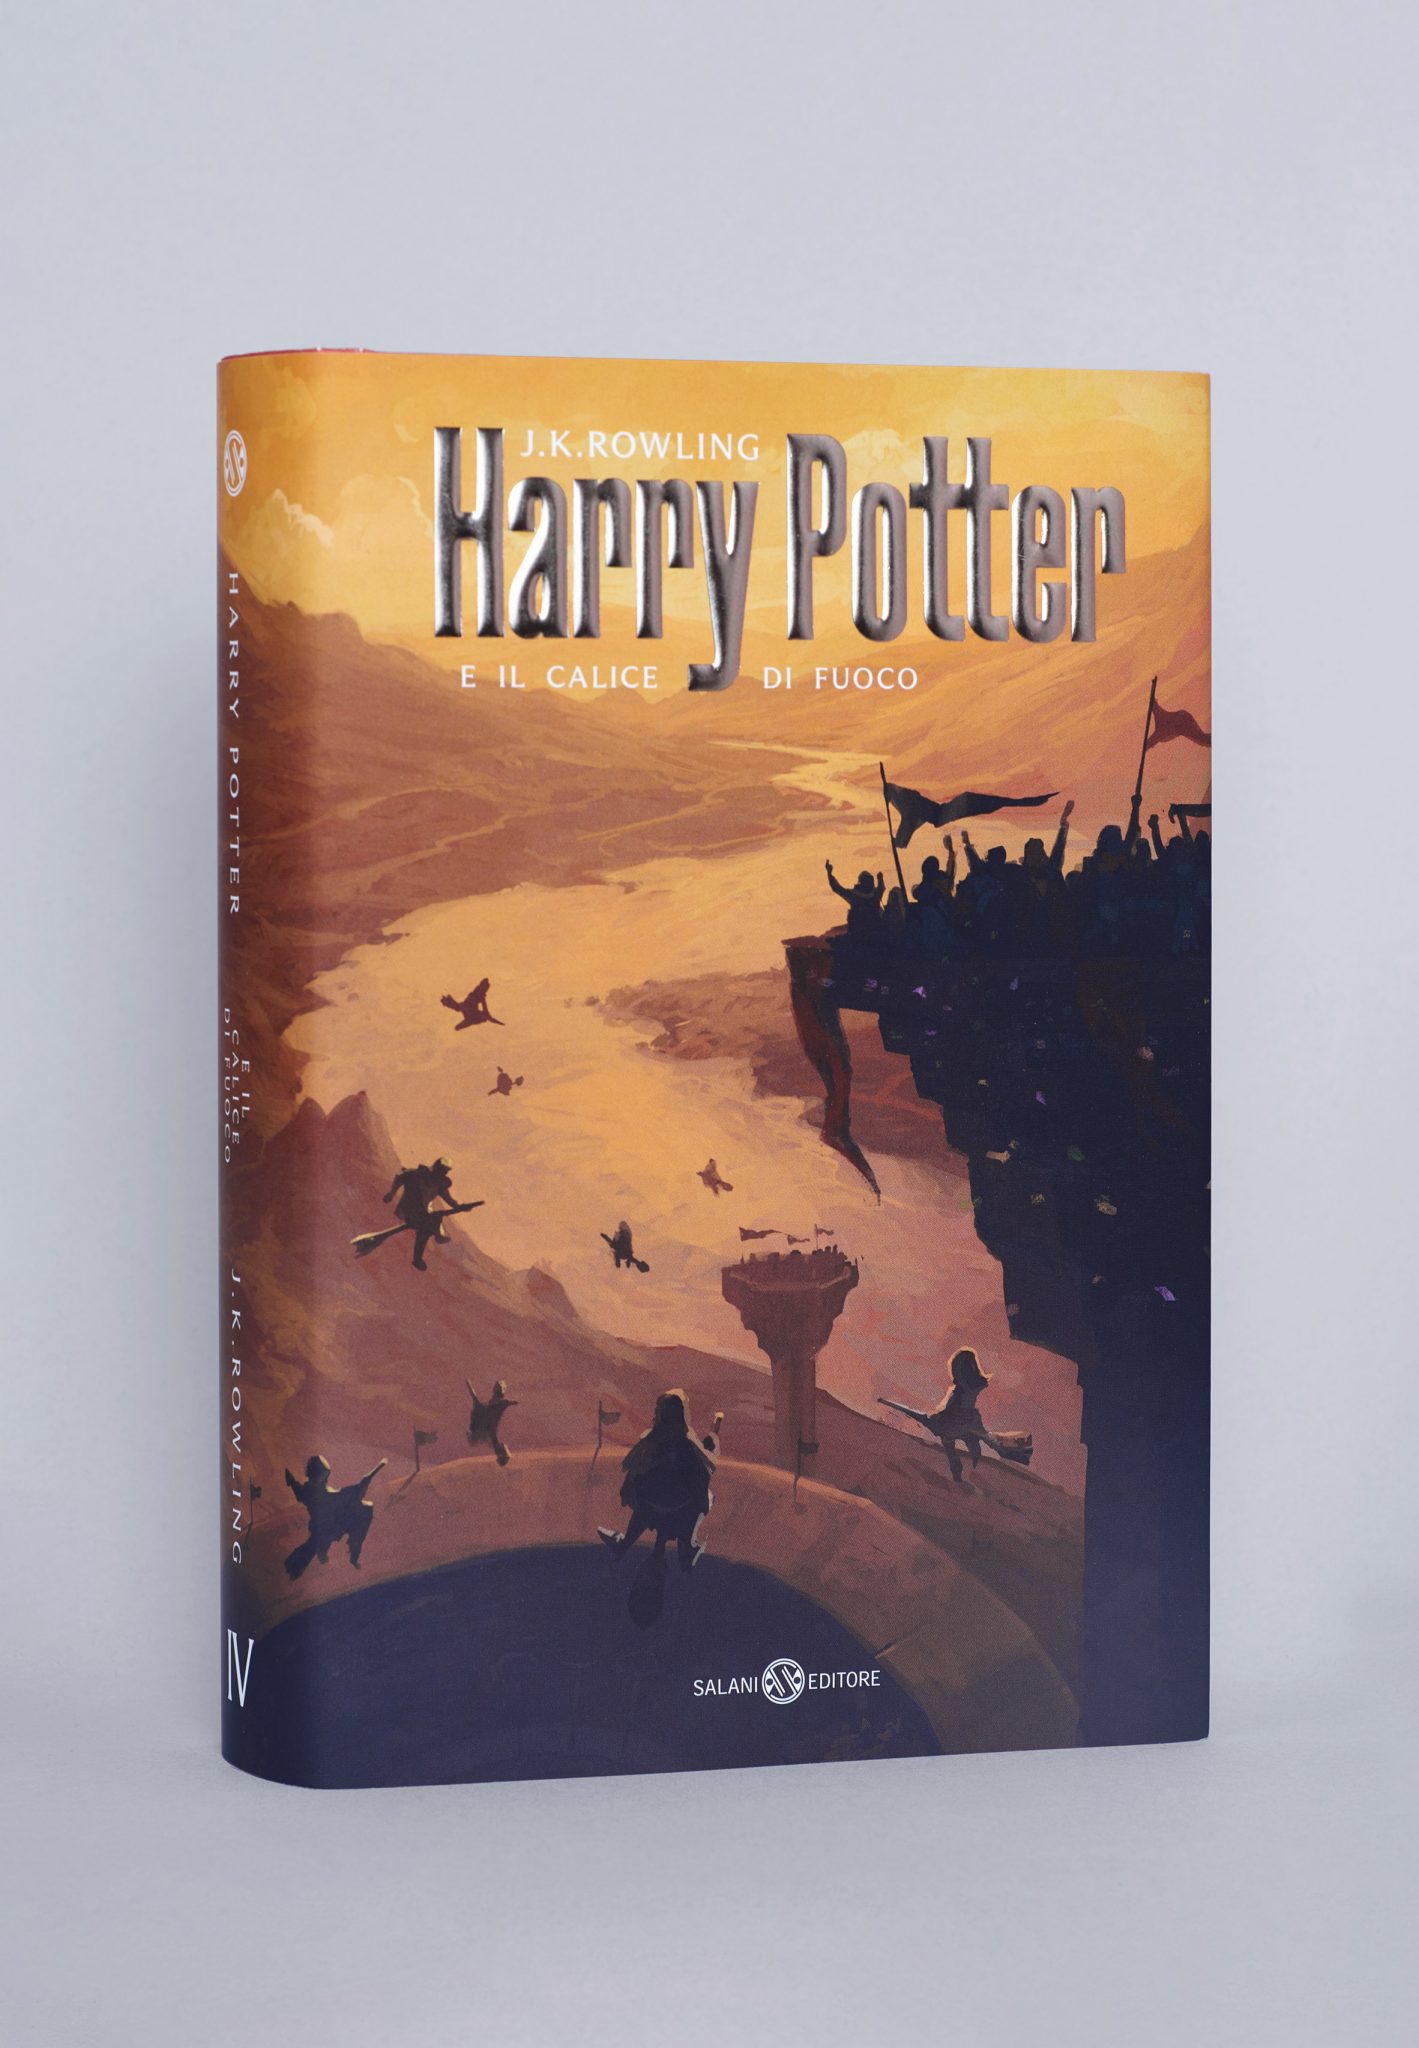 Архитектор Микеле де Лукки перепридумал обложки книг о Гарри Поттере (фото 4)